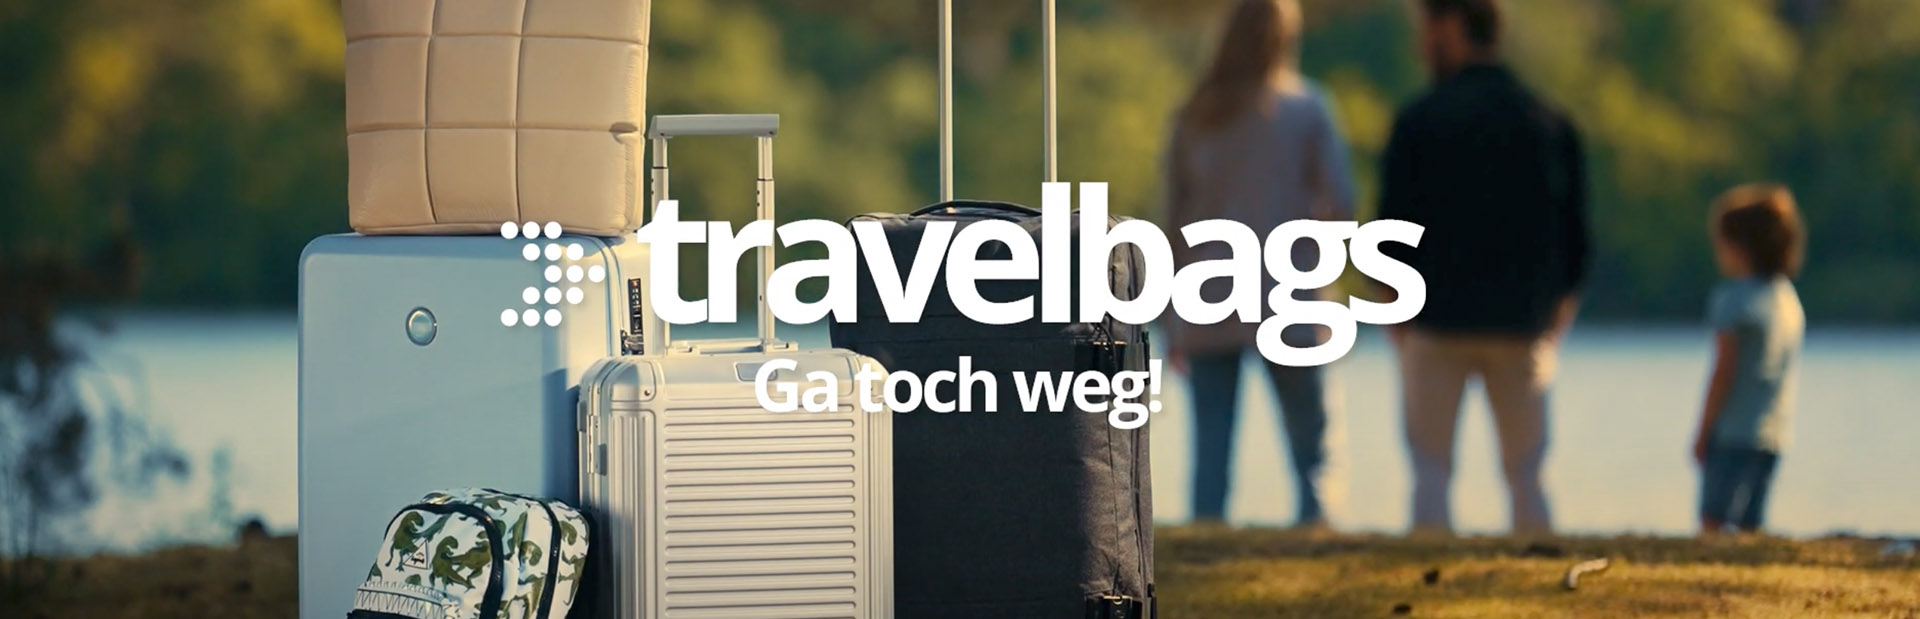 Header_Travelbags